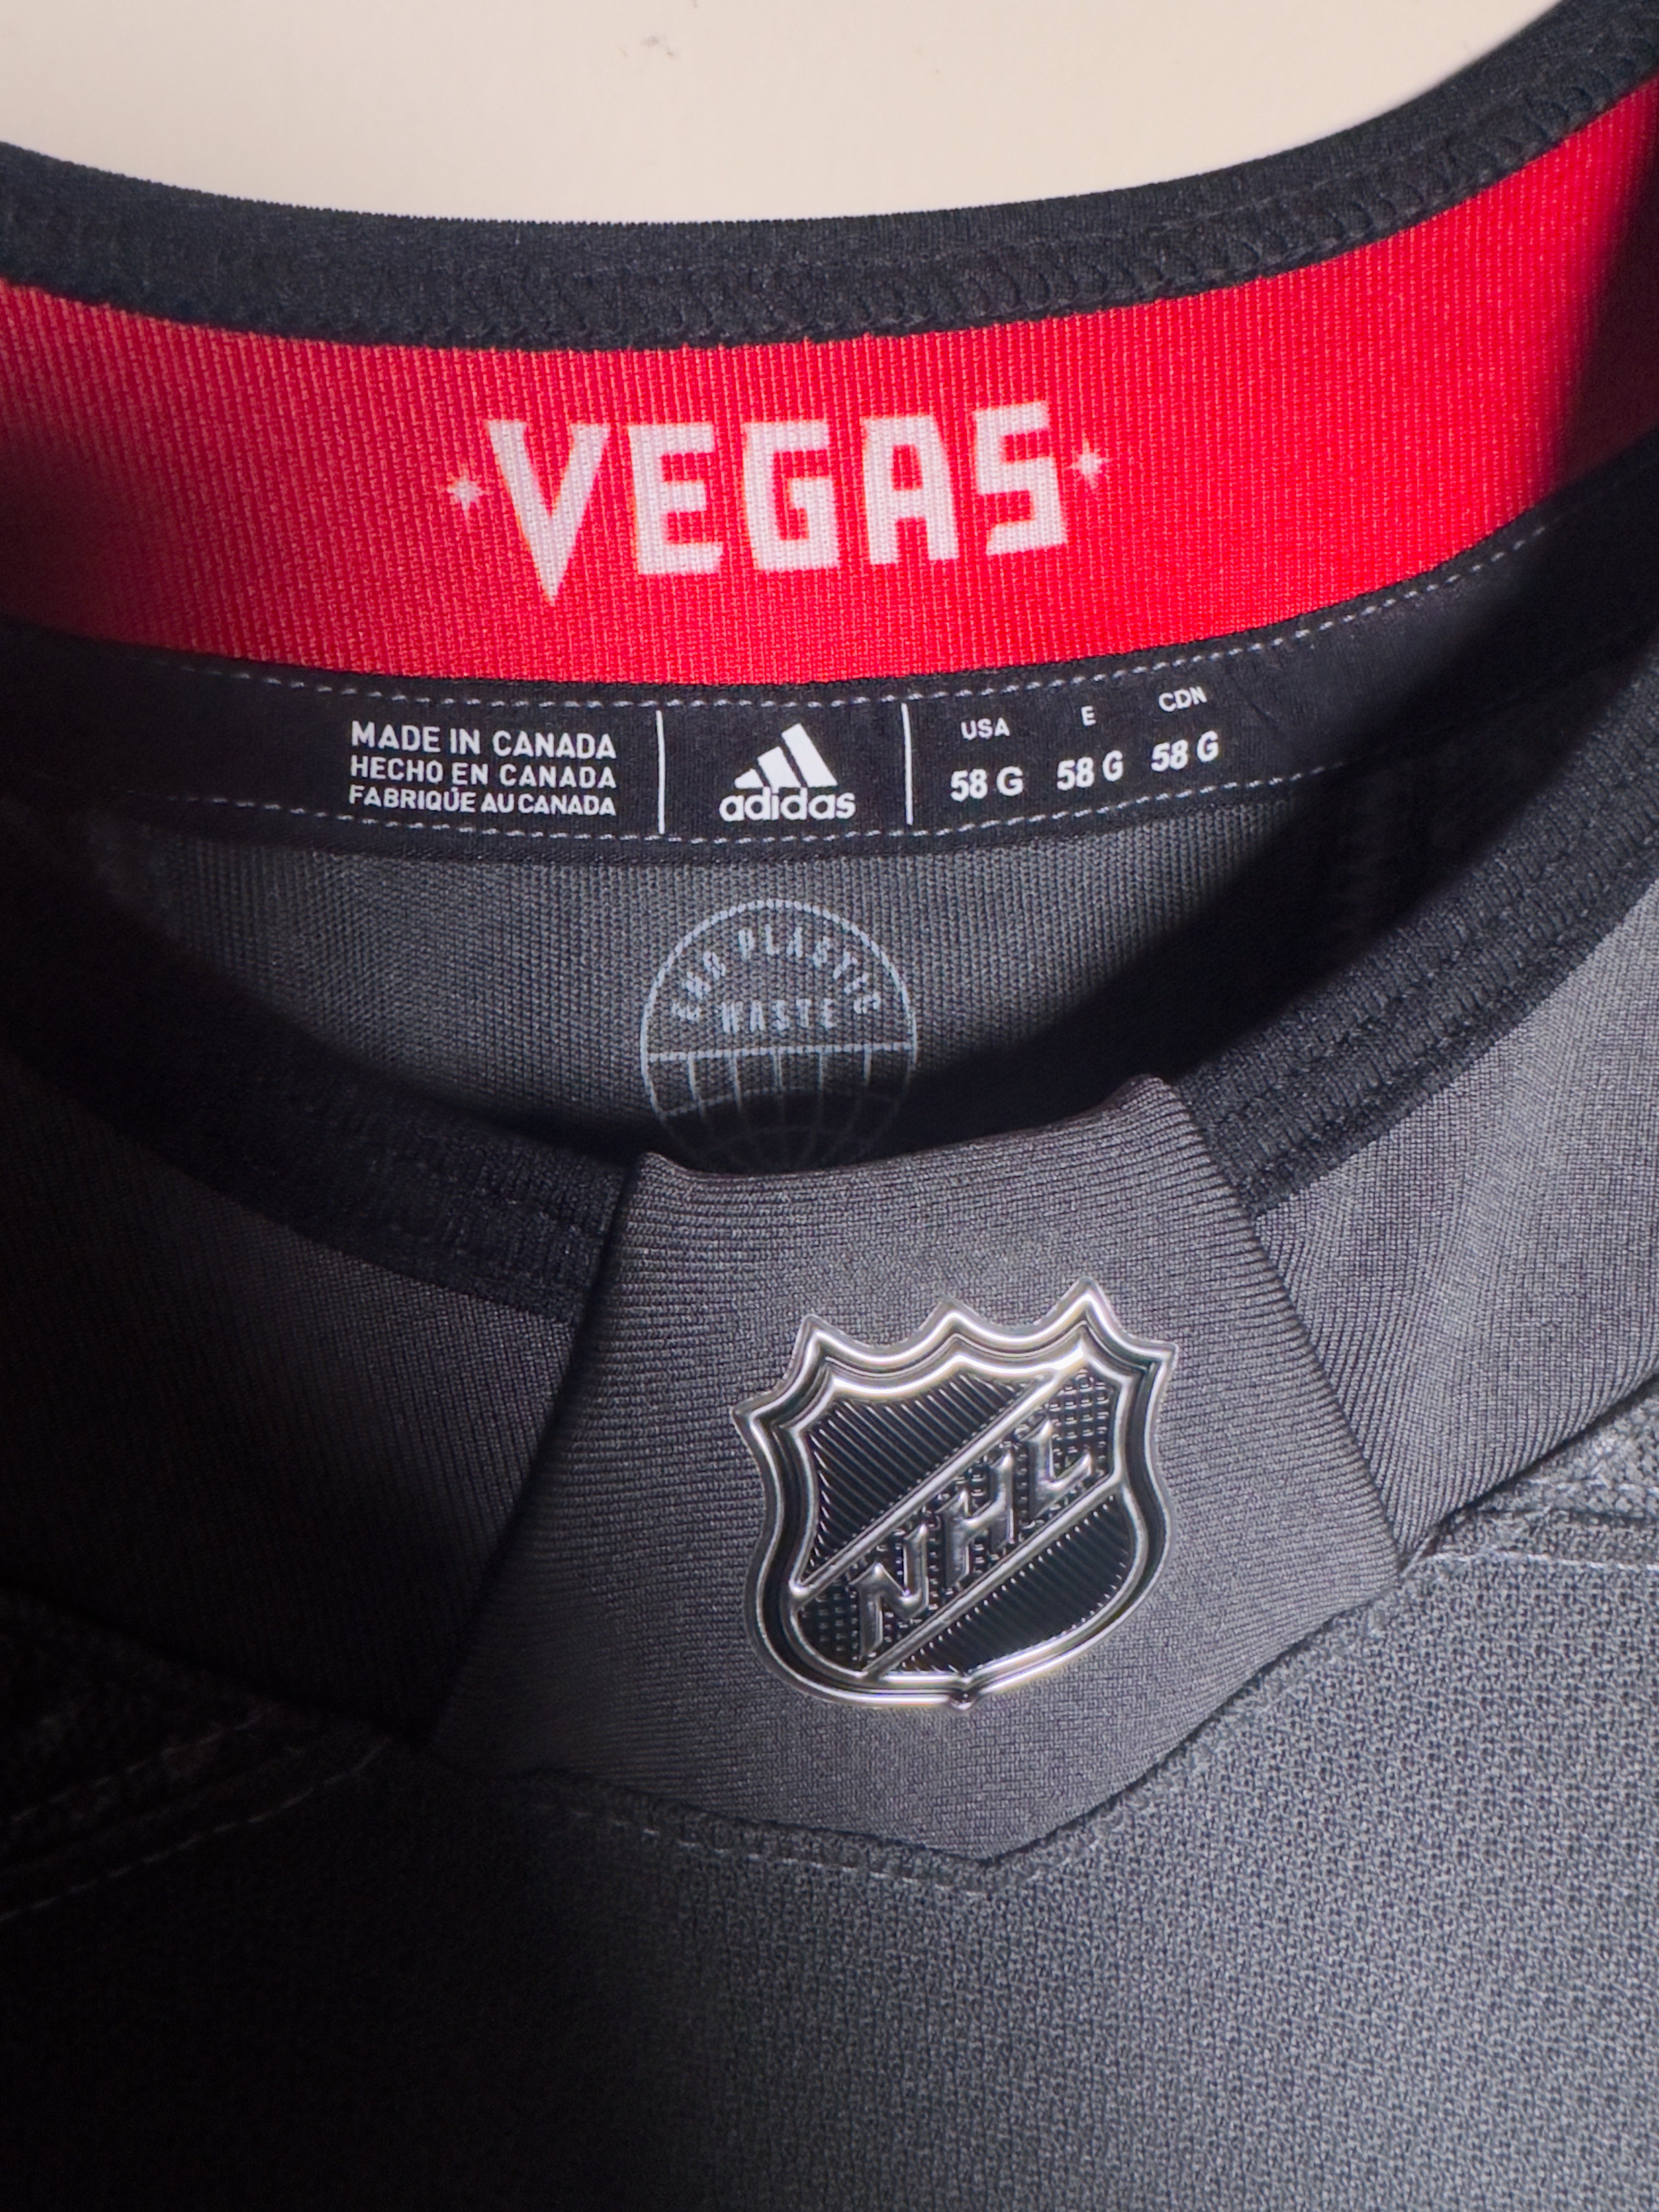 Vegas Golden Knights NHL Adidas MiC Team Issued Alternate Jersey Size 58G (Goalie Cut)